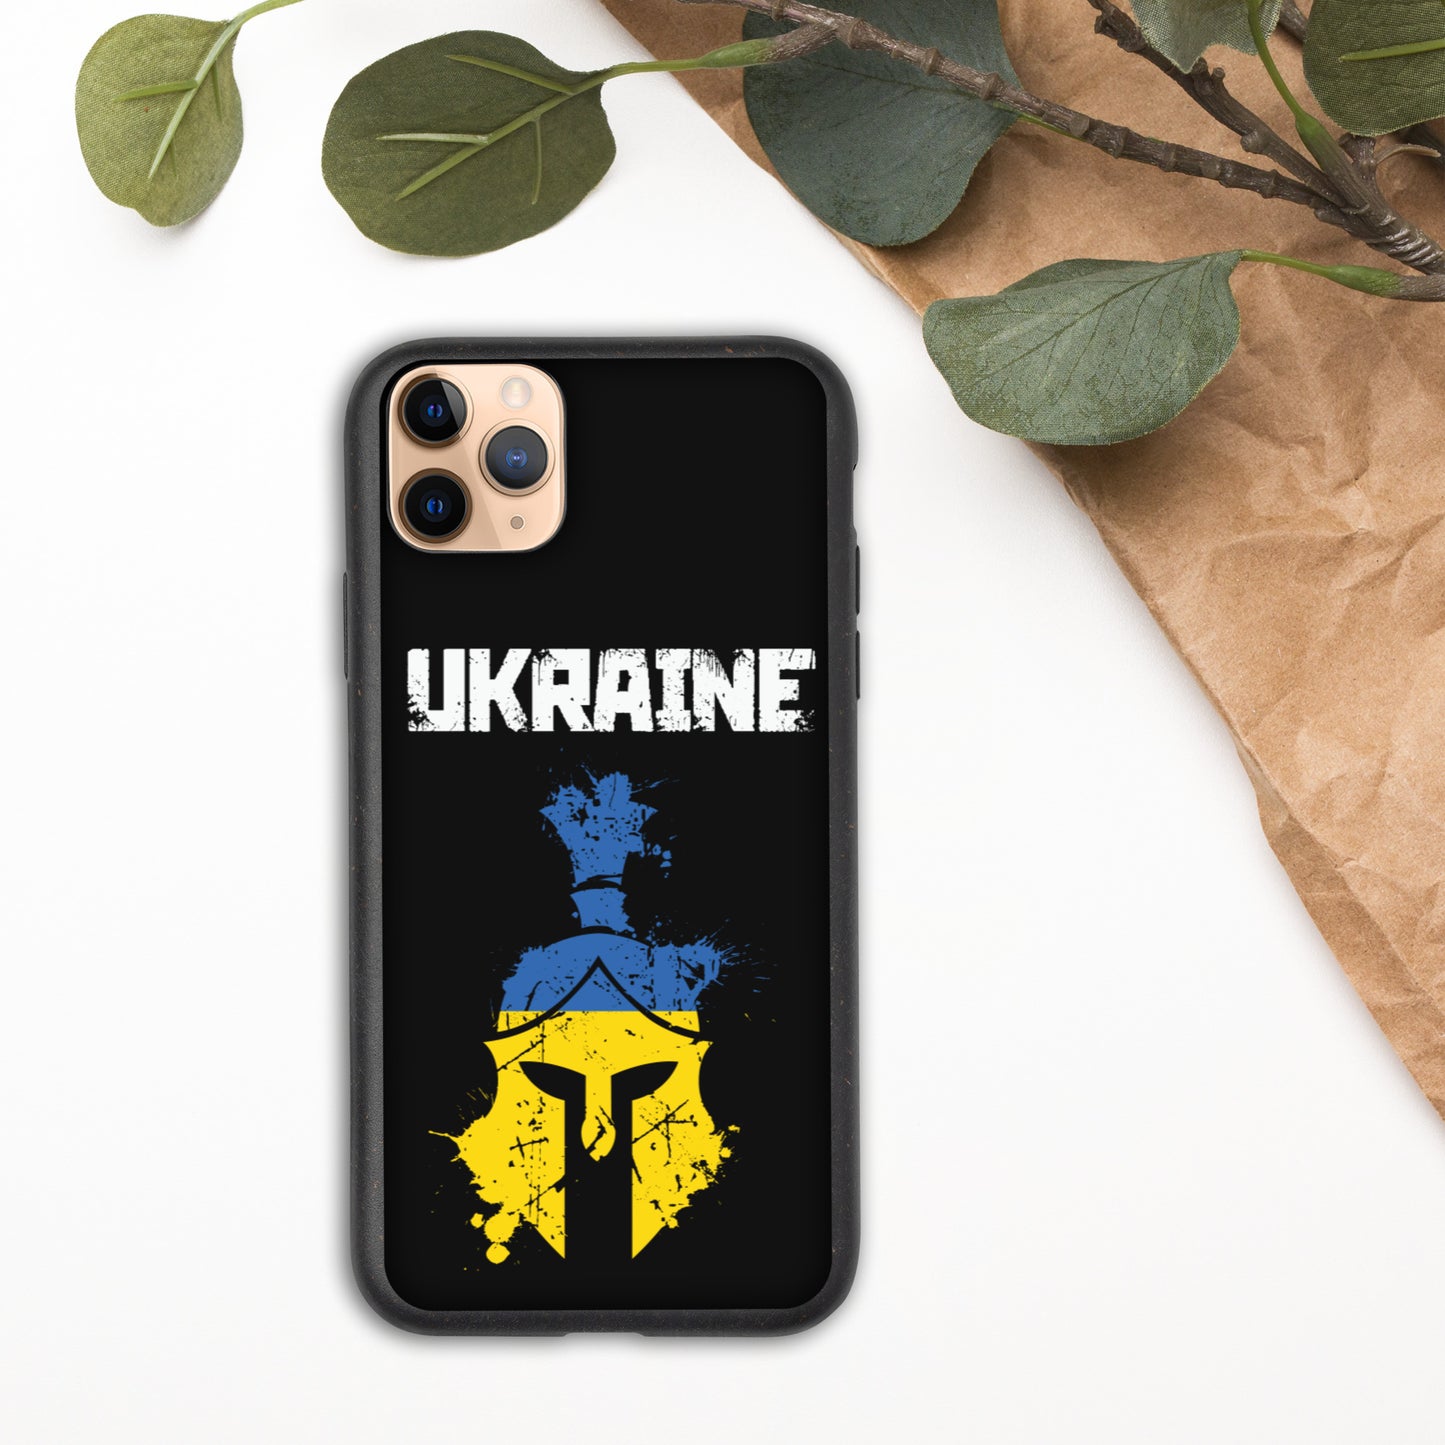 Ukrainian Warrior Support Ukraine | Speckled iPhone case